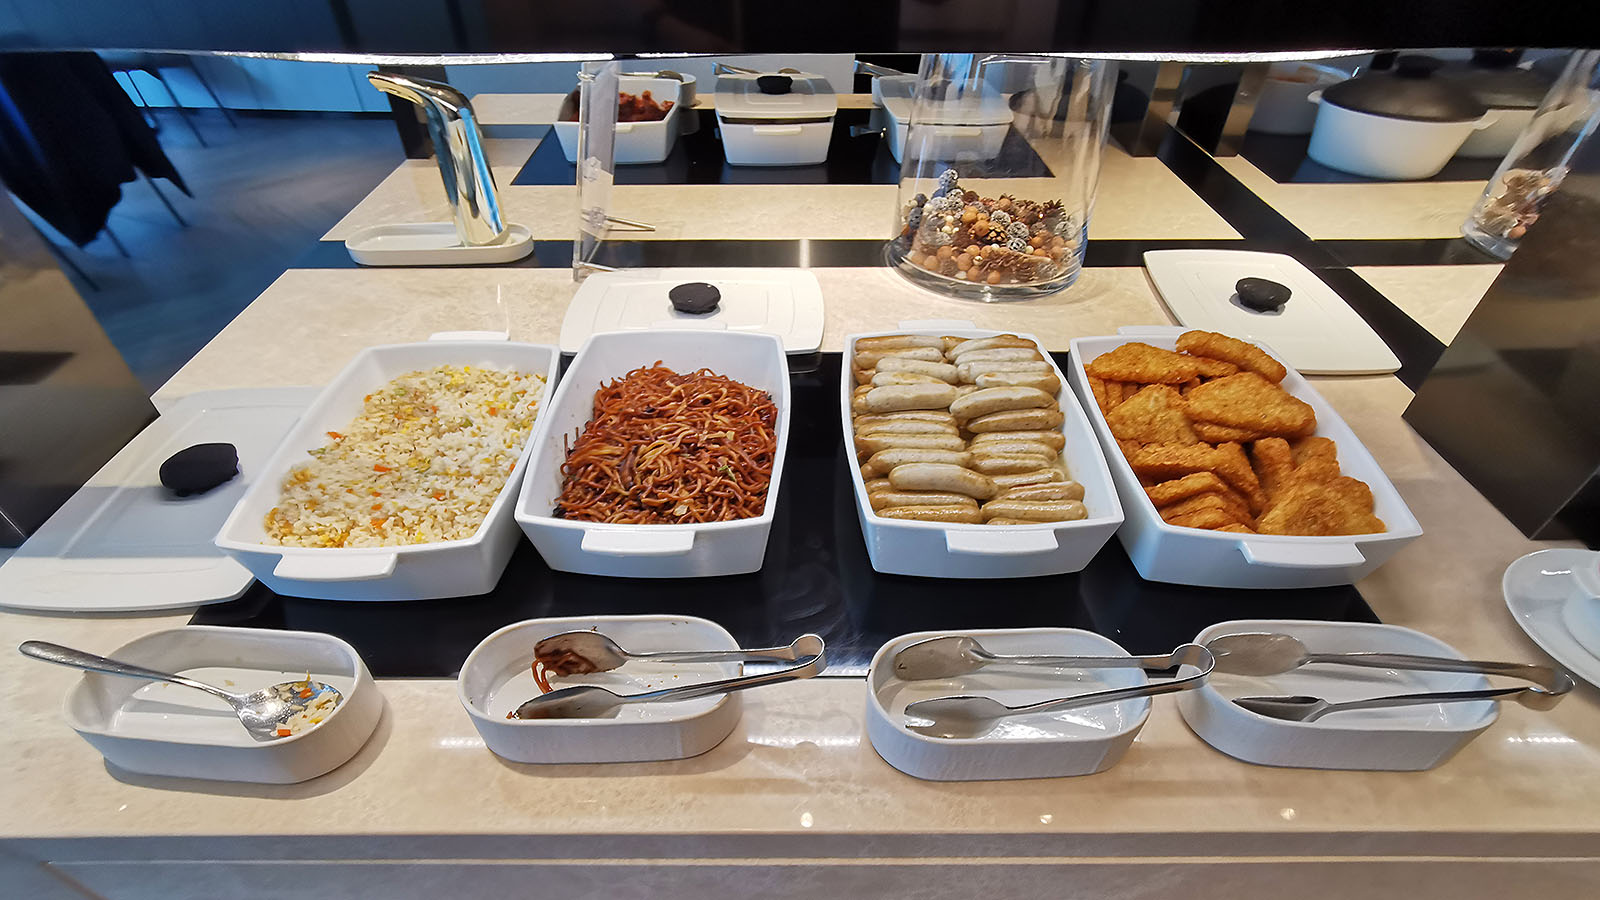 Executive Lounge breakfast at Hilton Singapore Orchard hotel